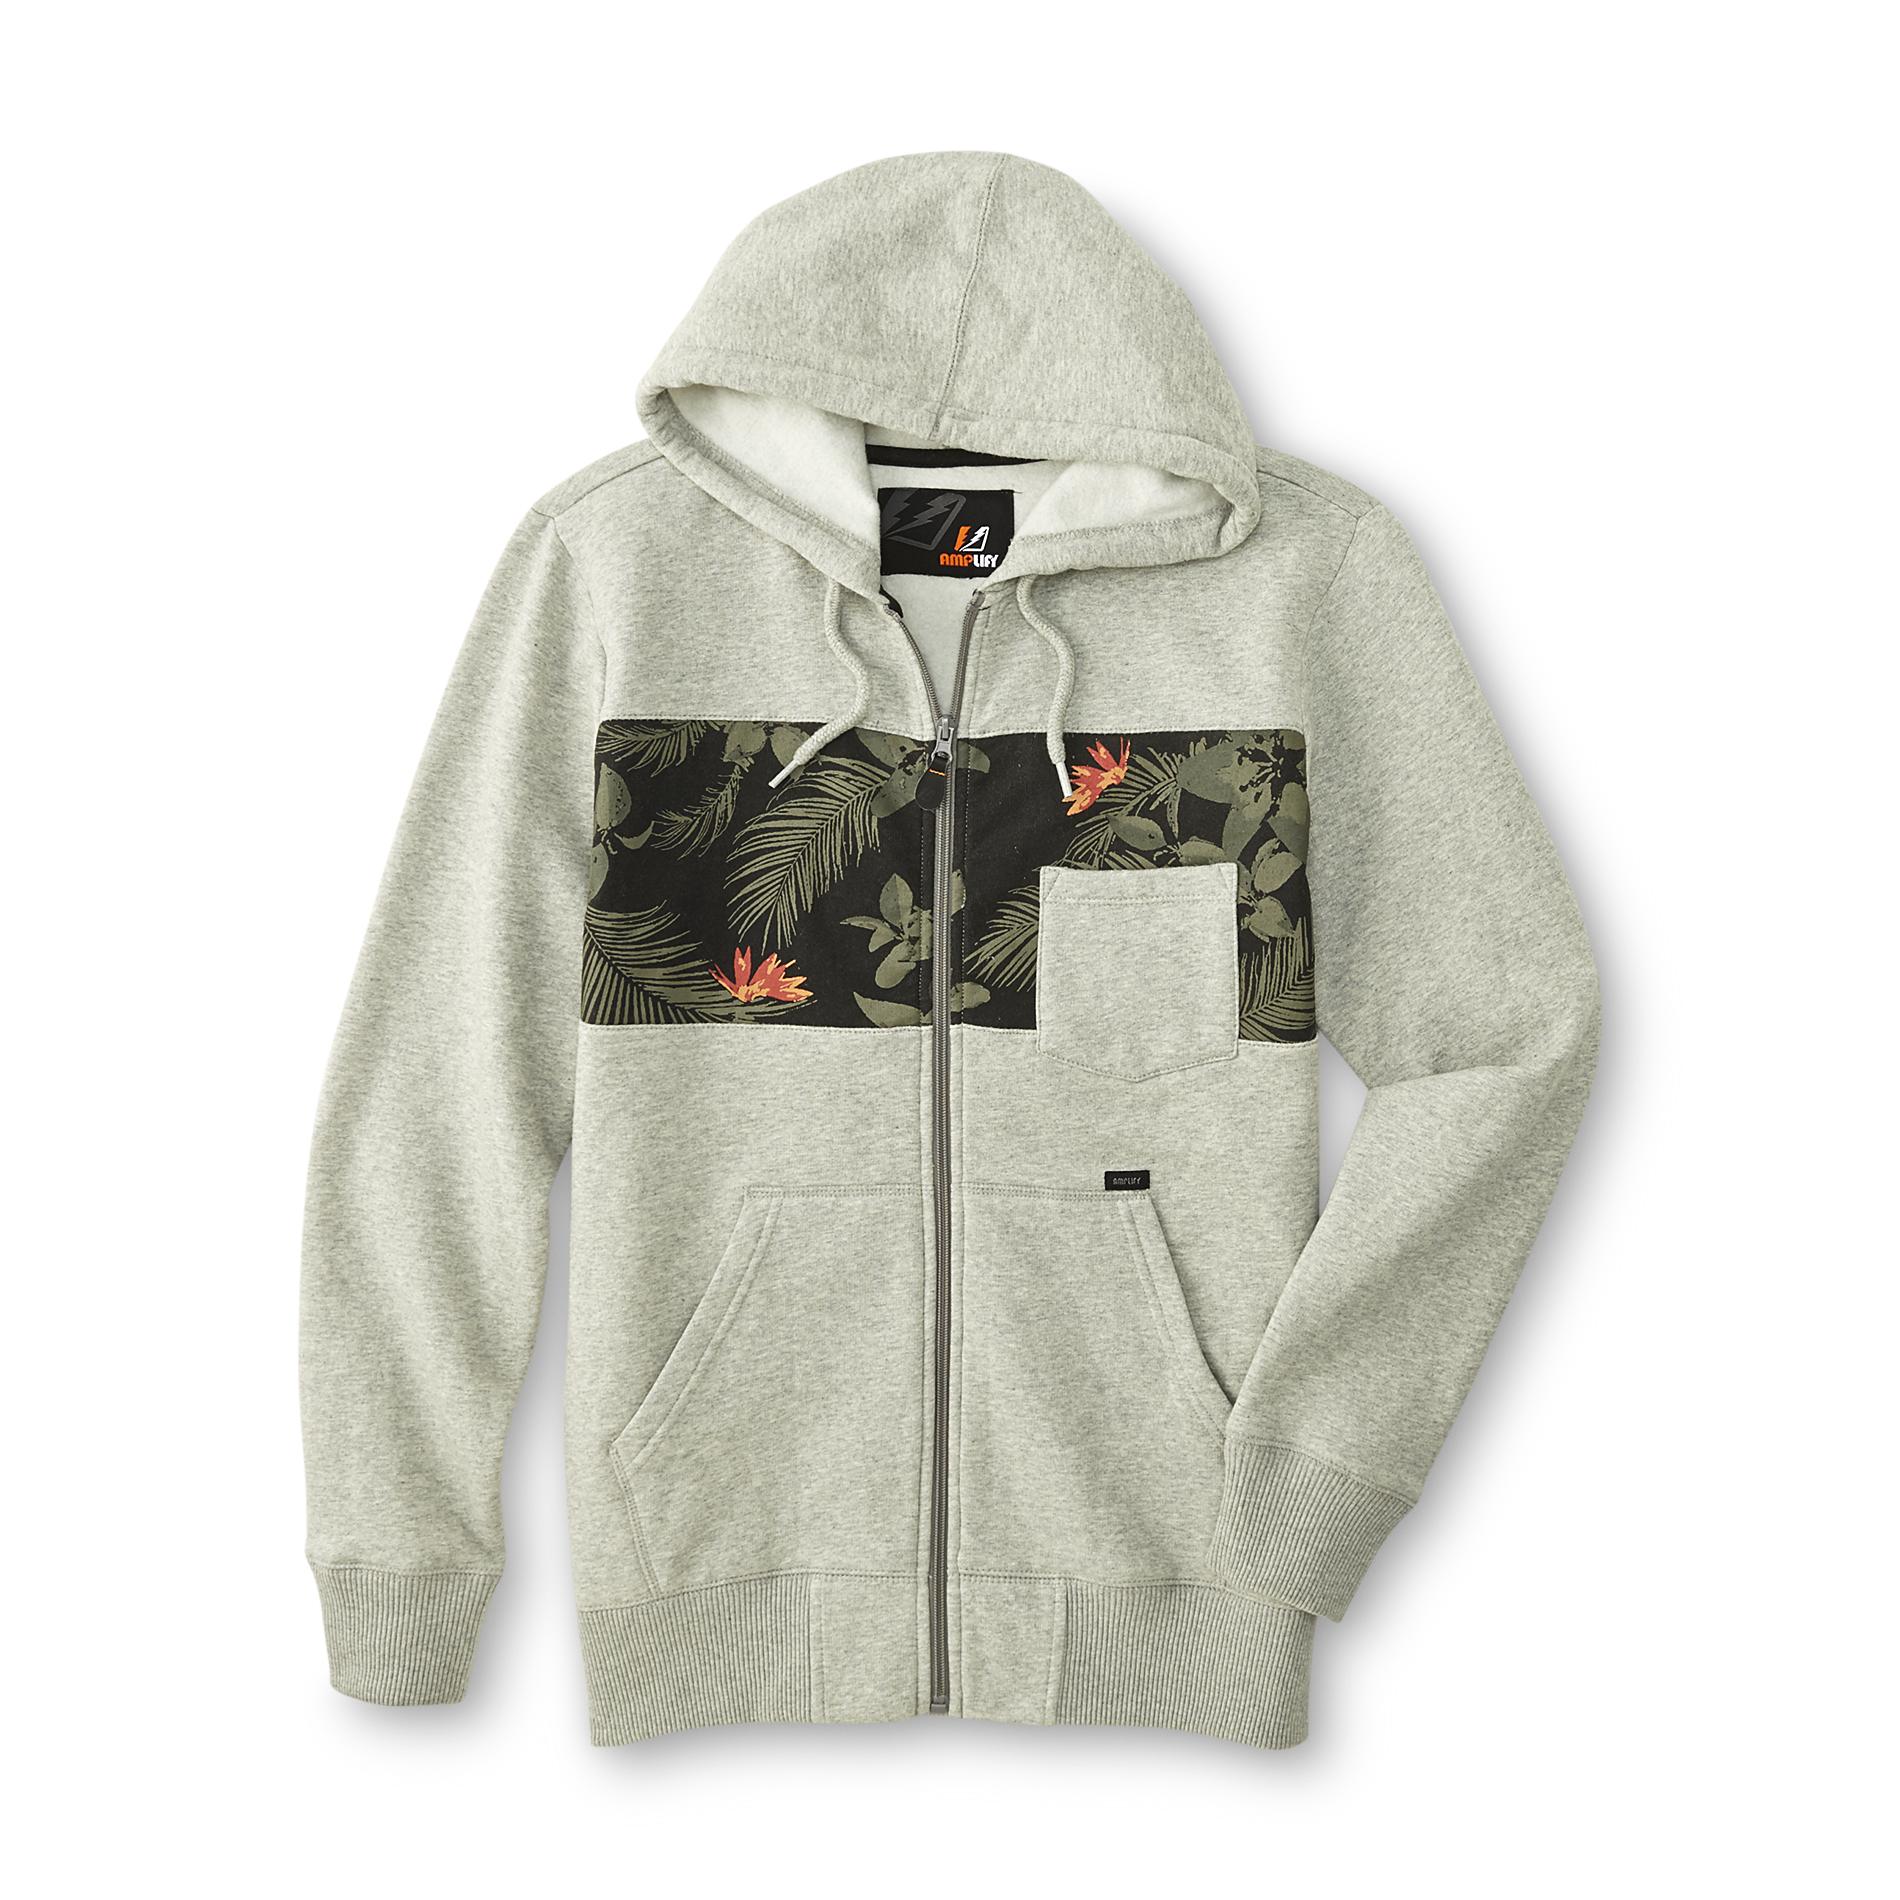 Amplify Young Men's Pocket Hoodie Jacket - Floral Print